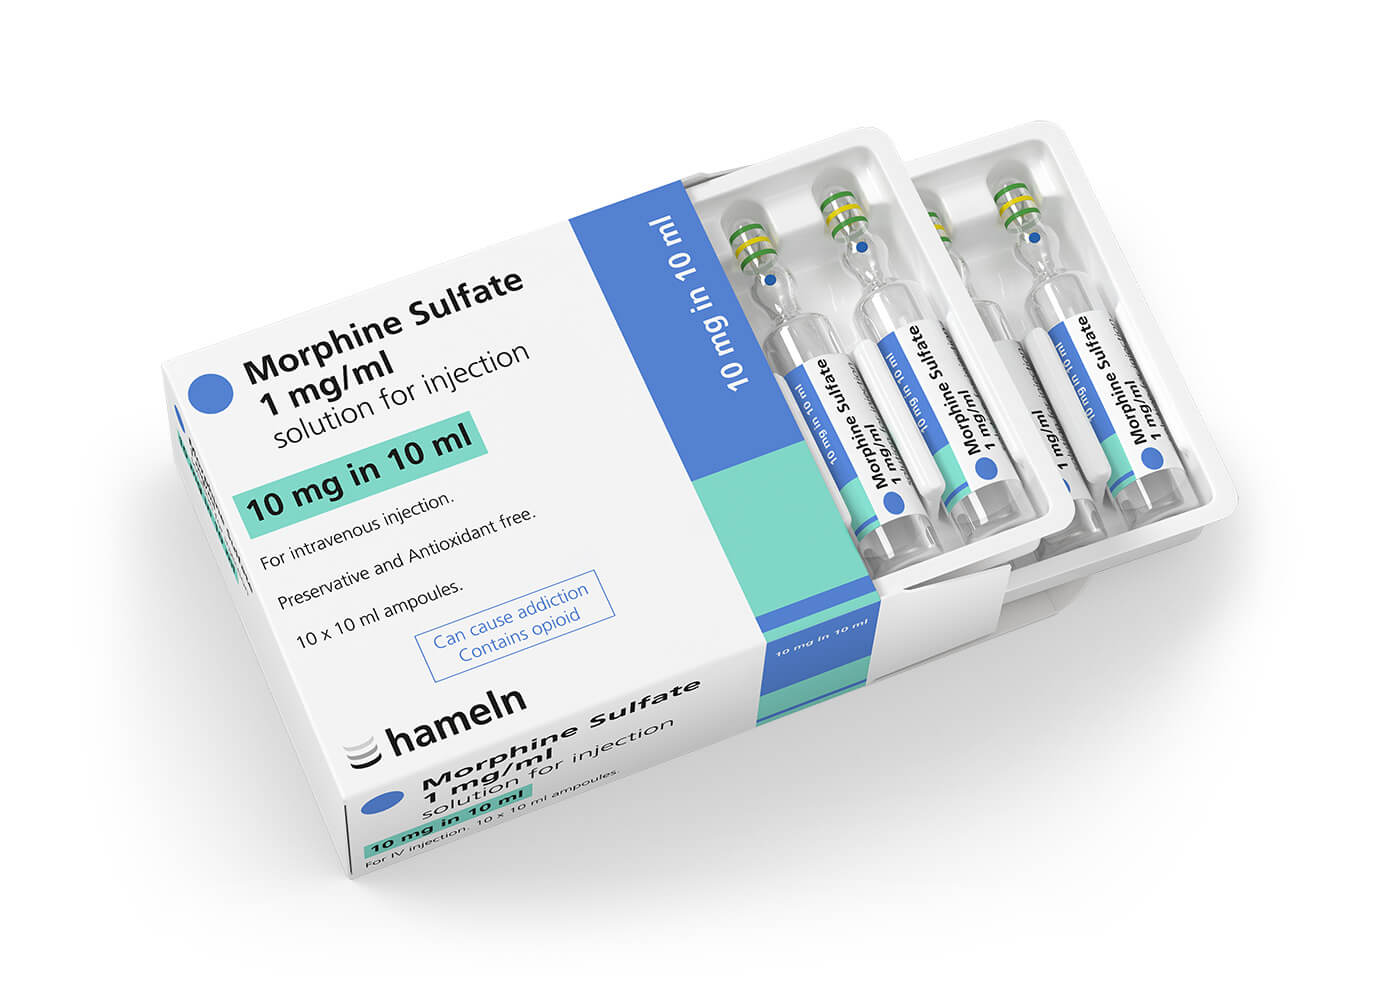 Morphine_UK_1_mg-ml_in_10_ml_Pack-Amp_10St_SH_2020-35